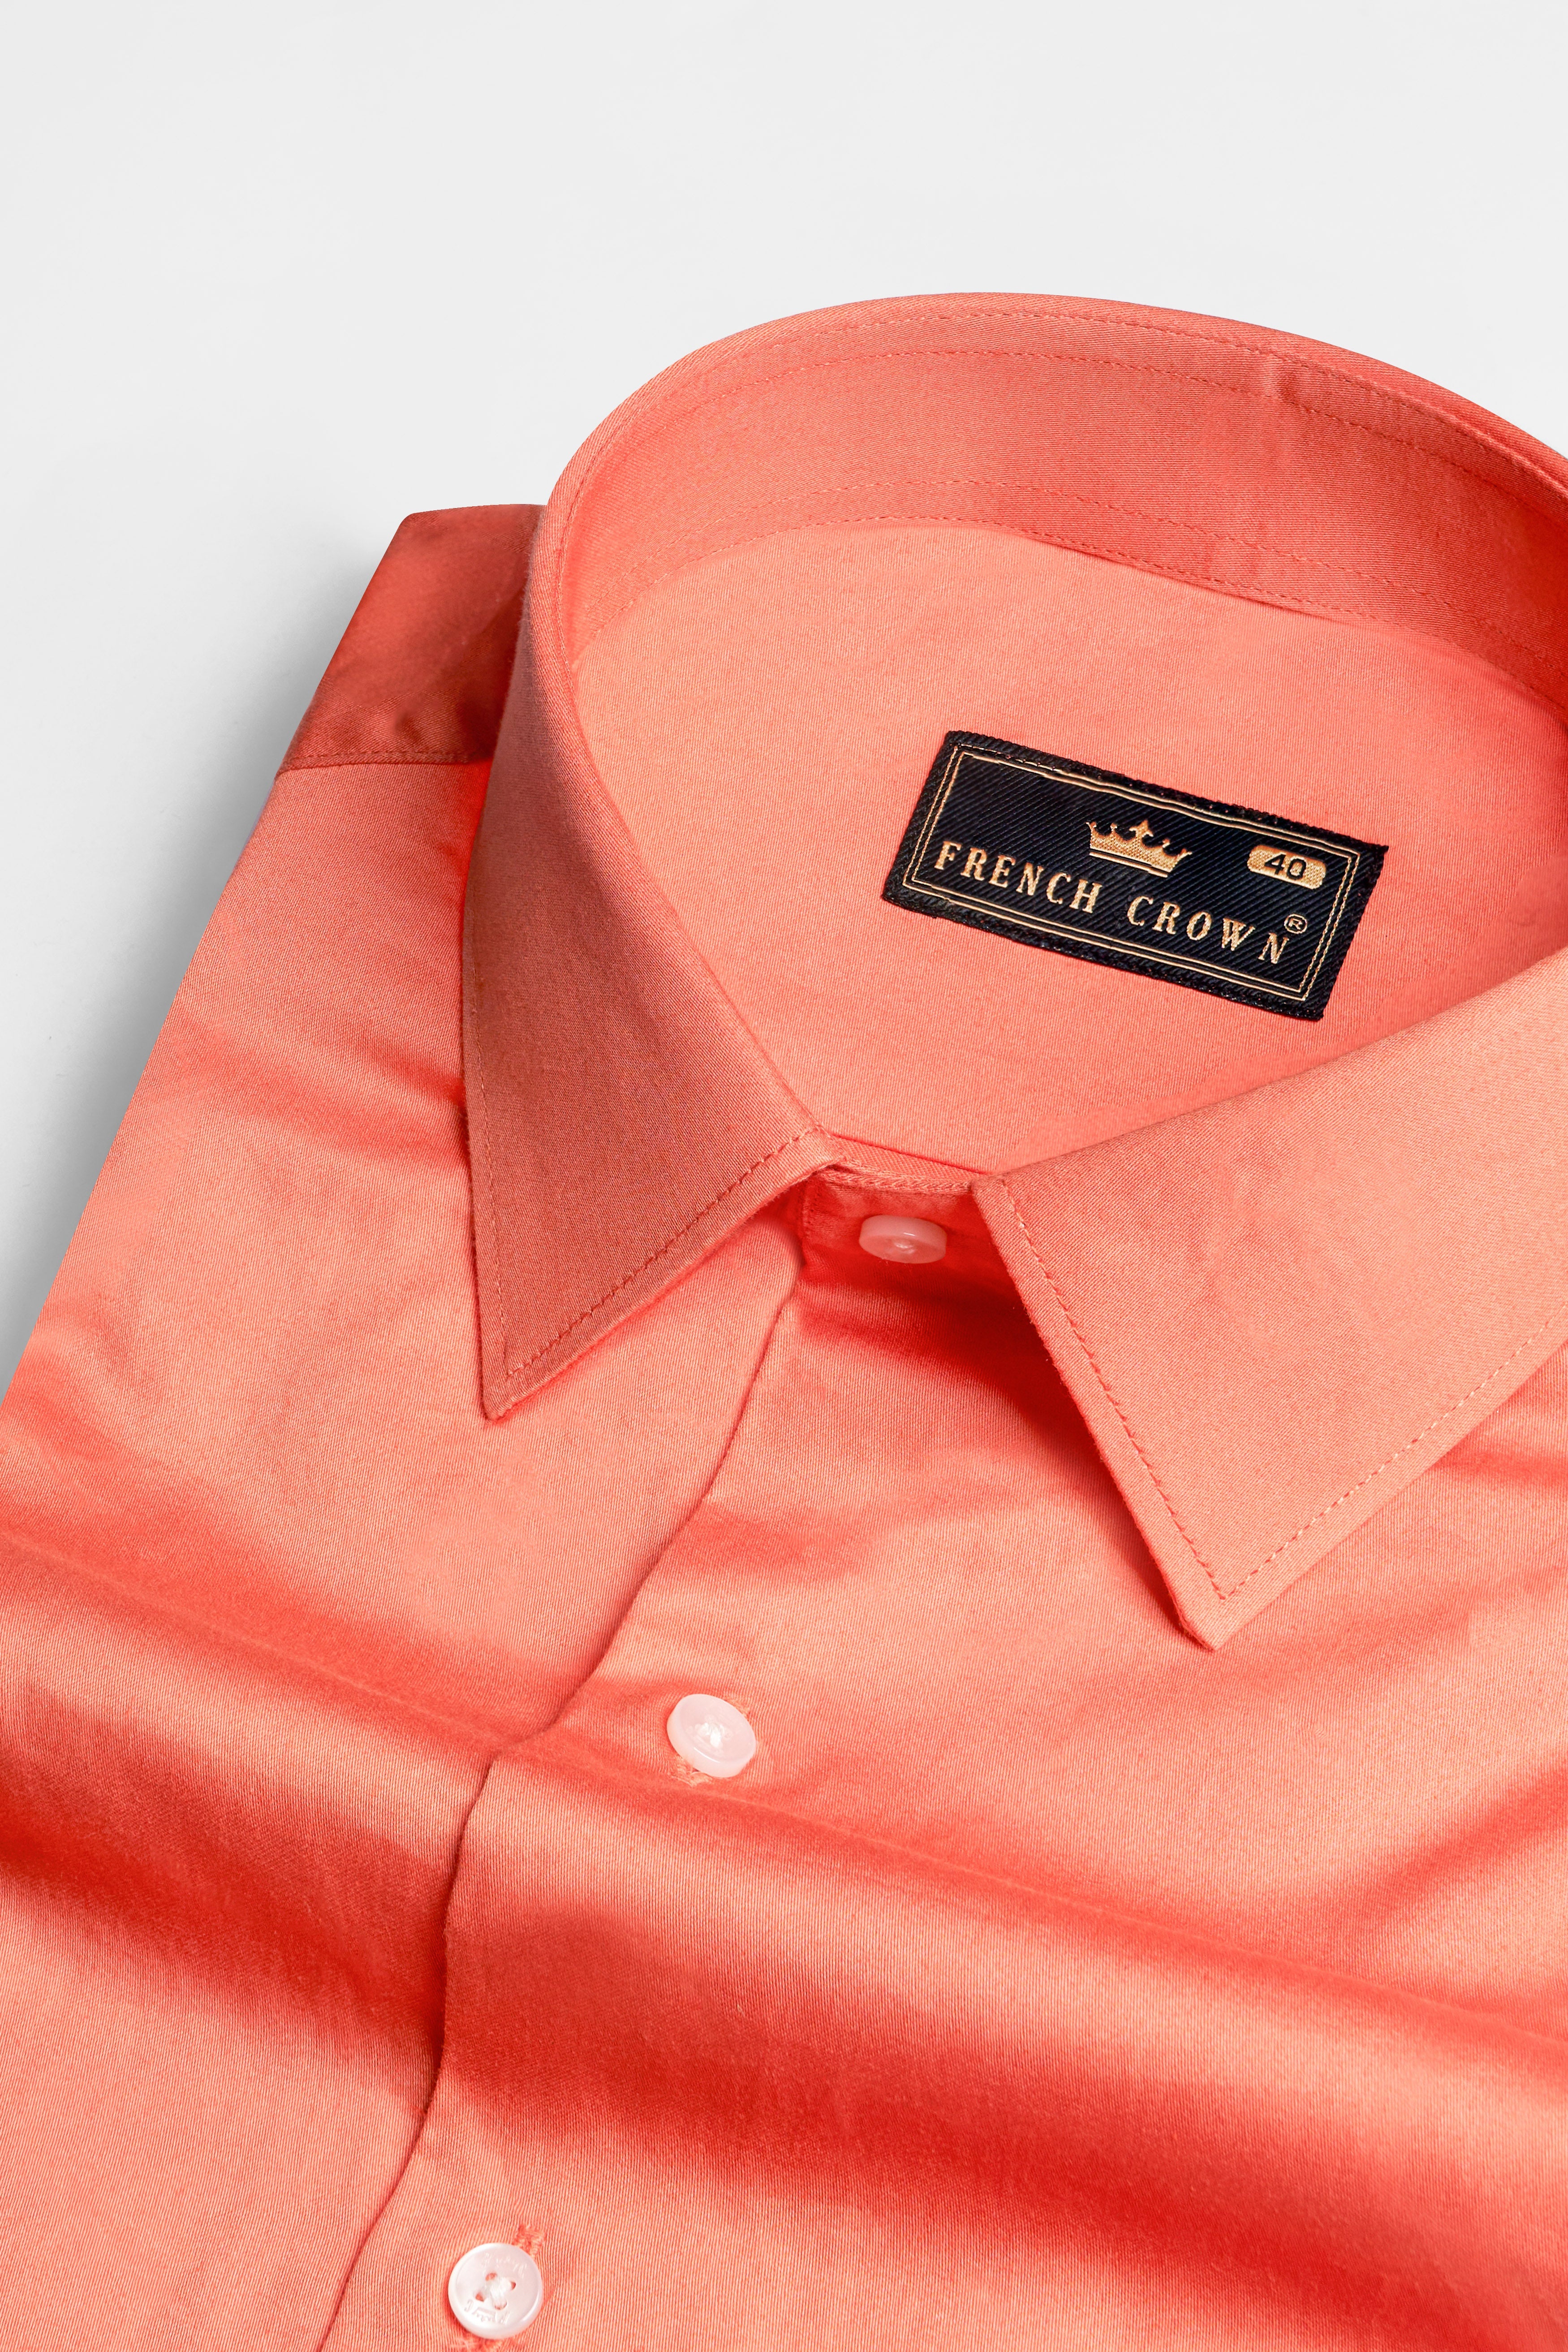 Vivid Tangerine Orange Twill Premium Cotton Shirt